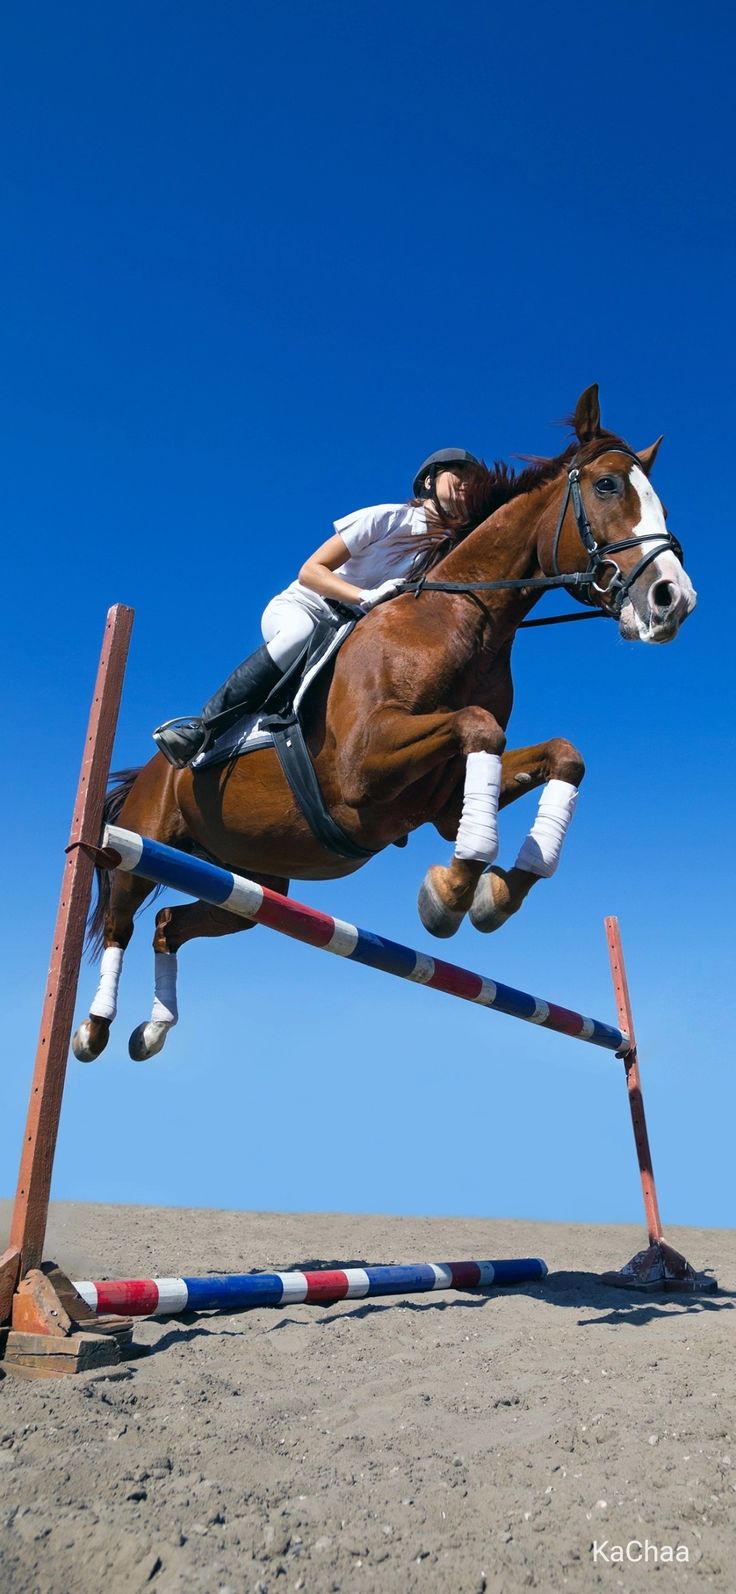 Jumping horse. Animals, Horses